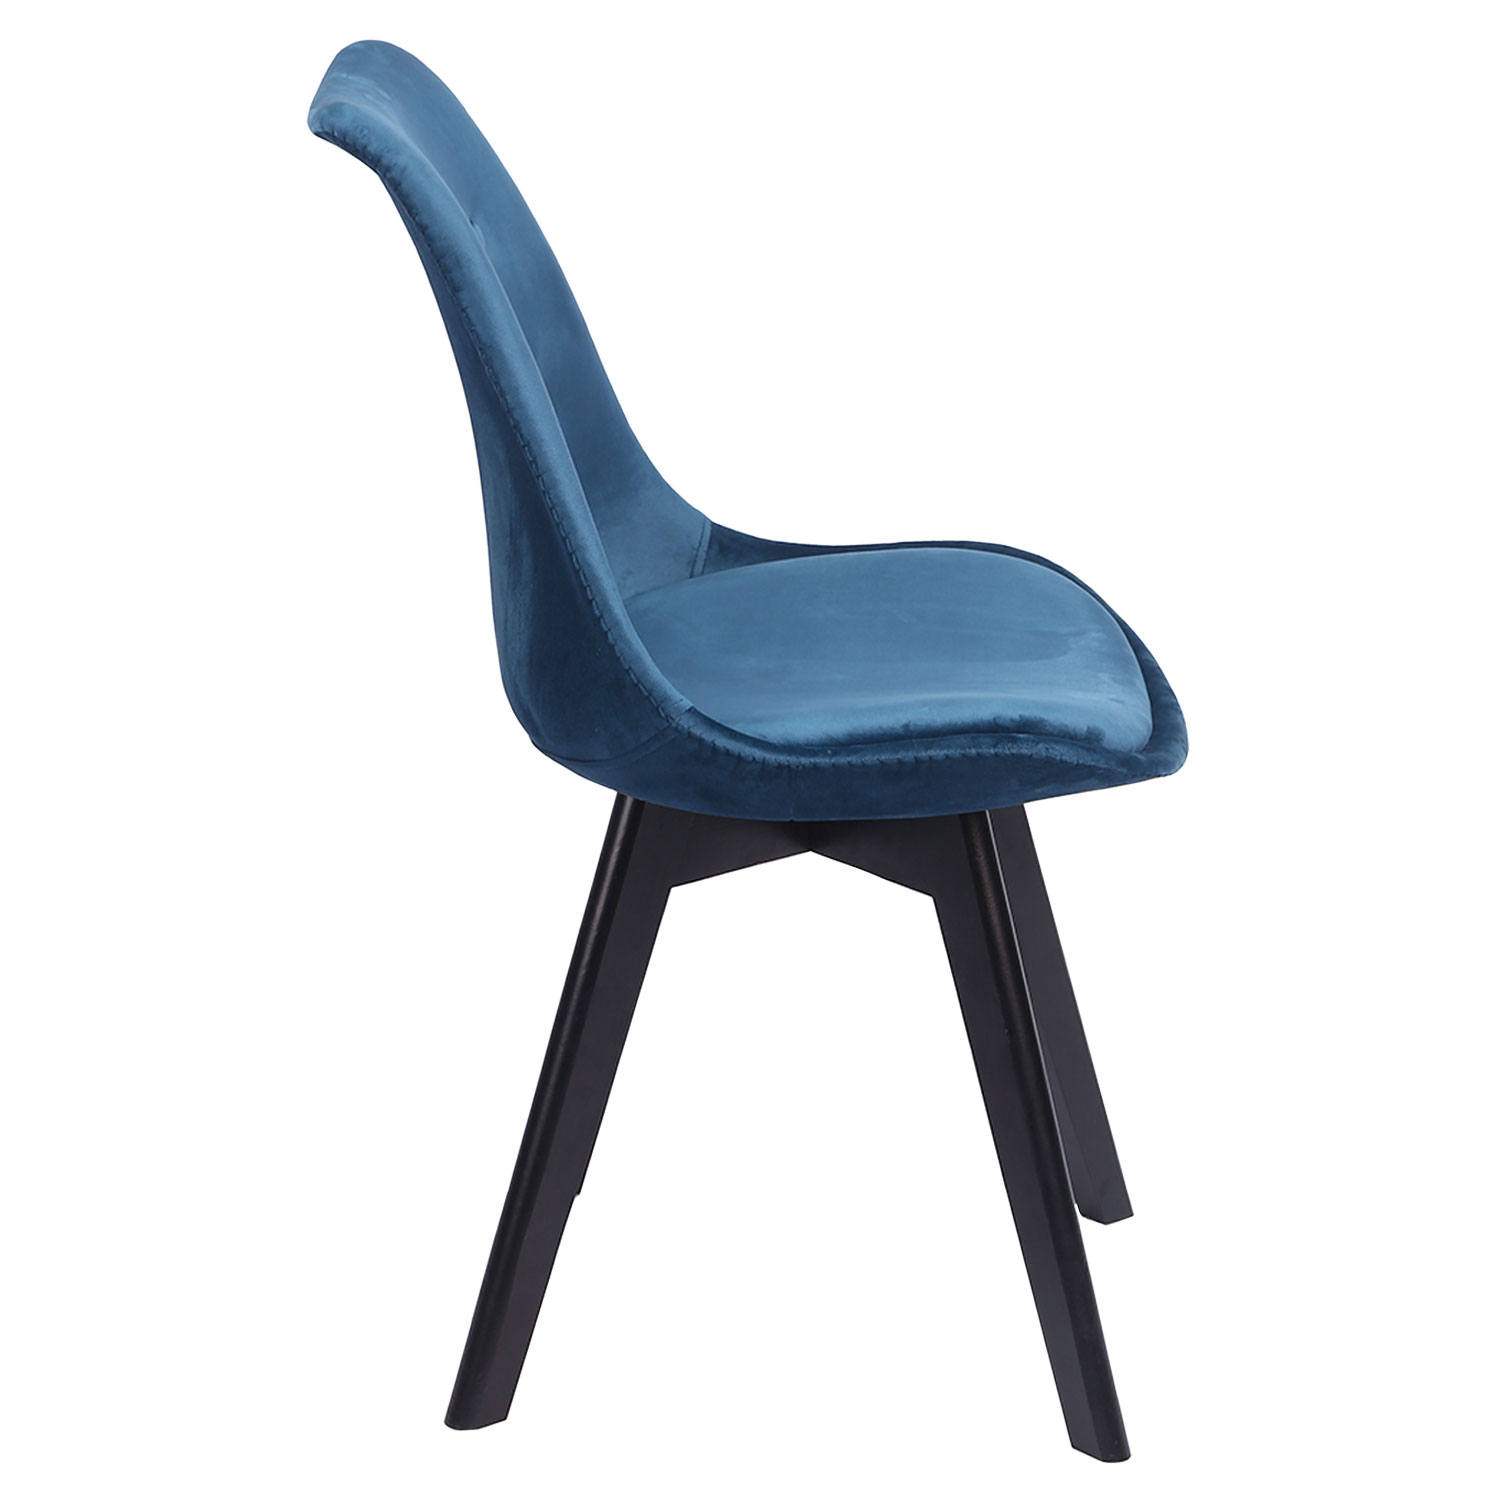 Set di 4 sedie NORA in velluto blu con cuscino